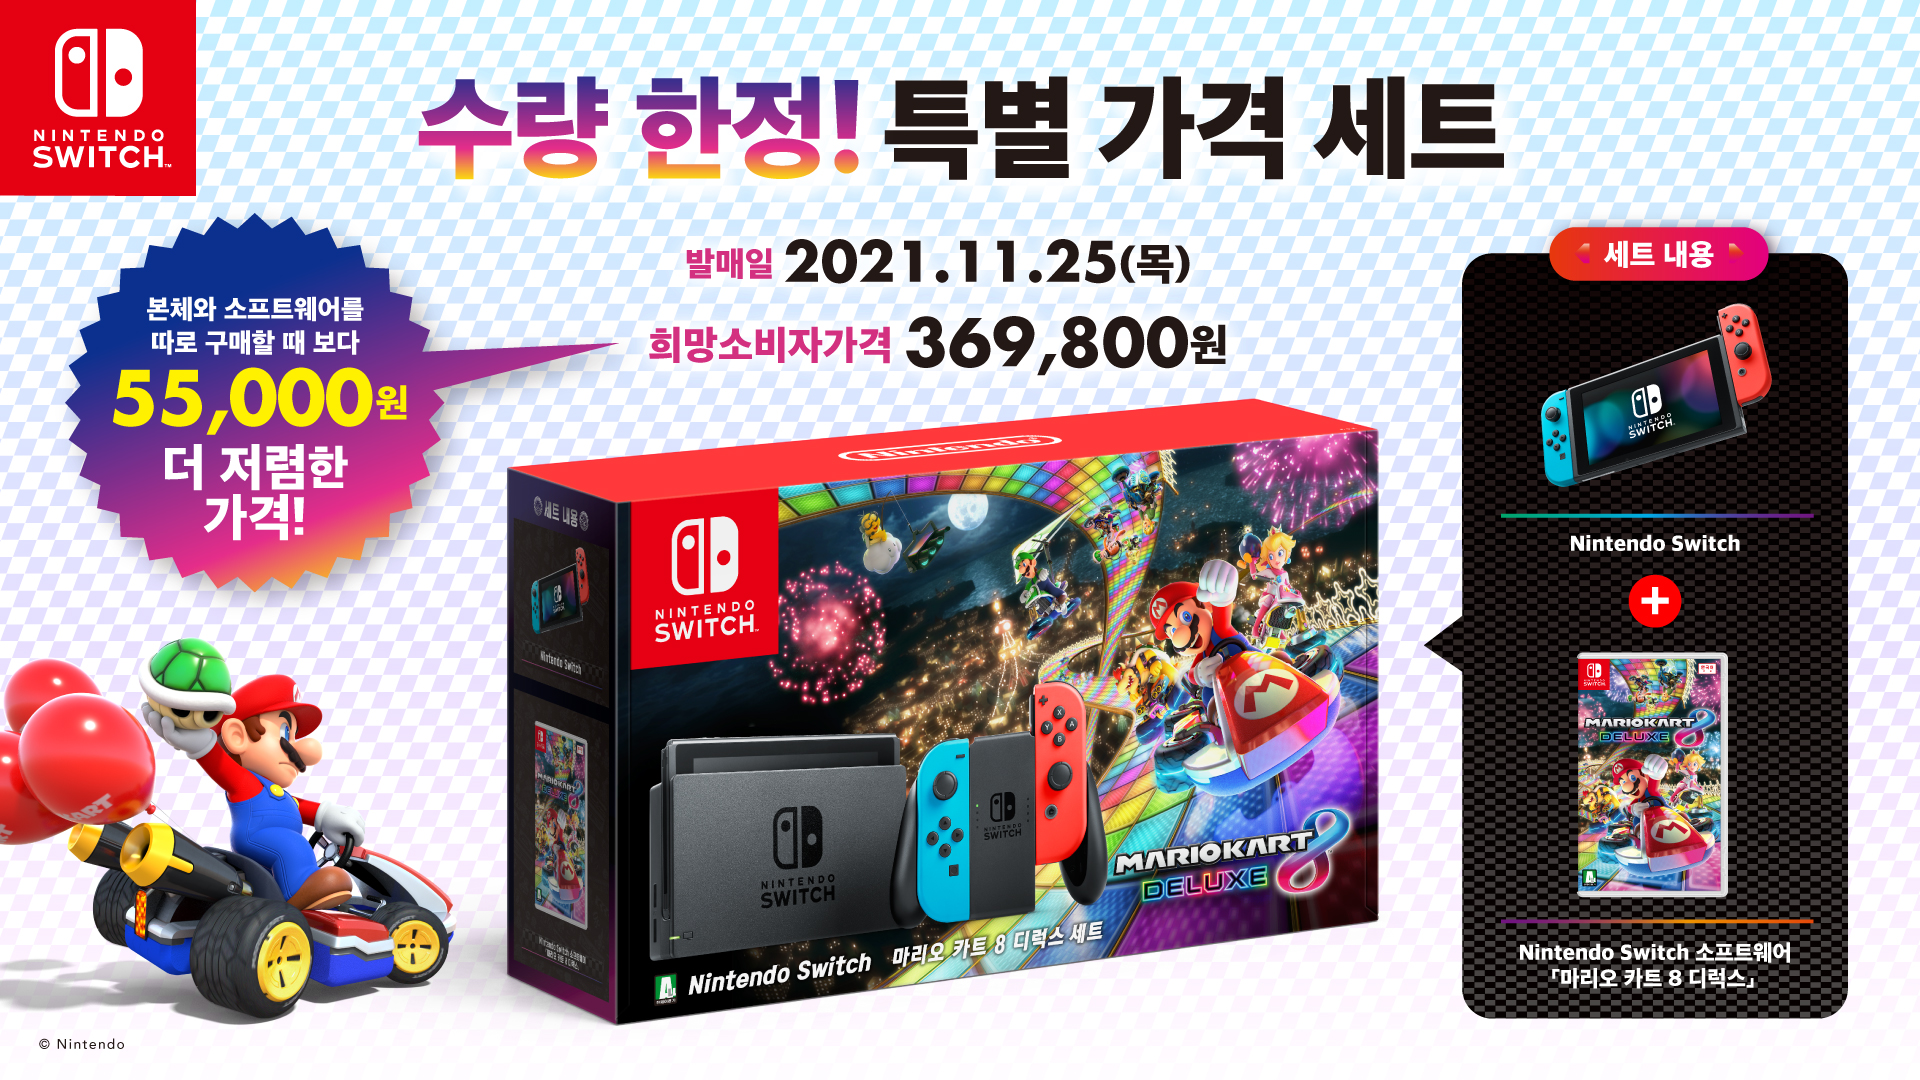 Nintendo Switch」本体と『マリオカート8 DX』のバンドルが韓国向け ...